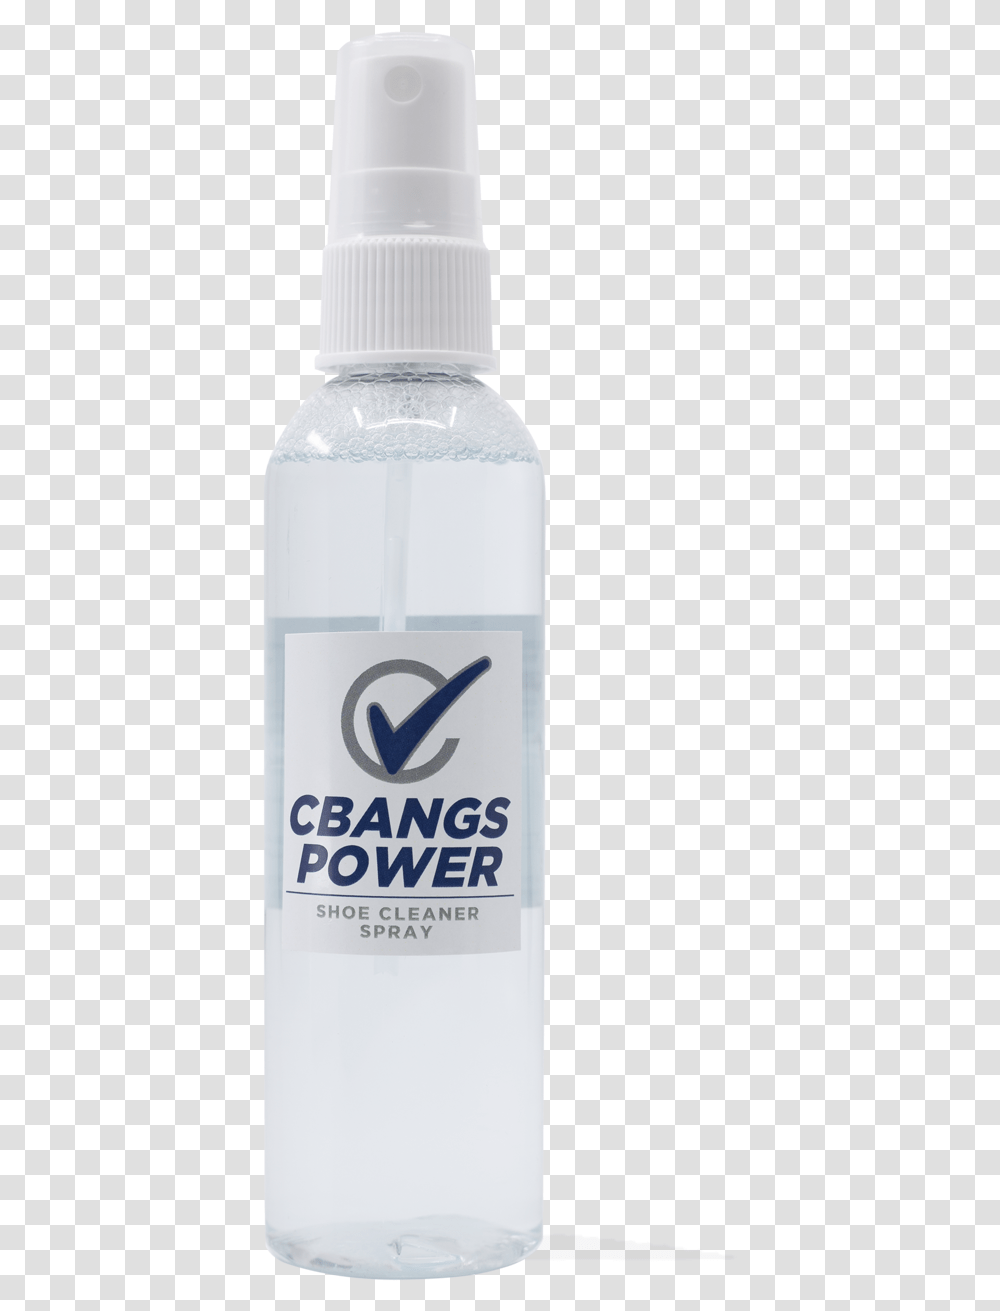 Cbangs Power Shoe Cleaner Spray Pure Romance Stretch Mark, Liquor, Alcohol, Beverage, Drink Transparent Png